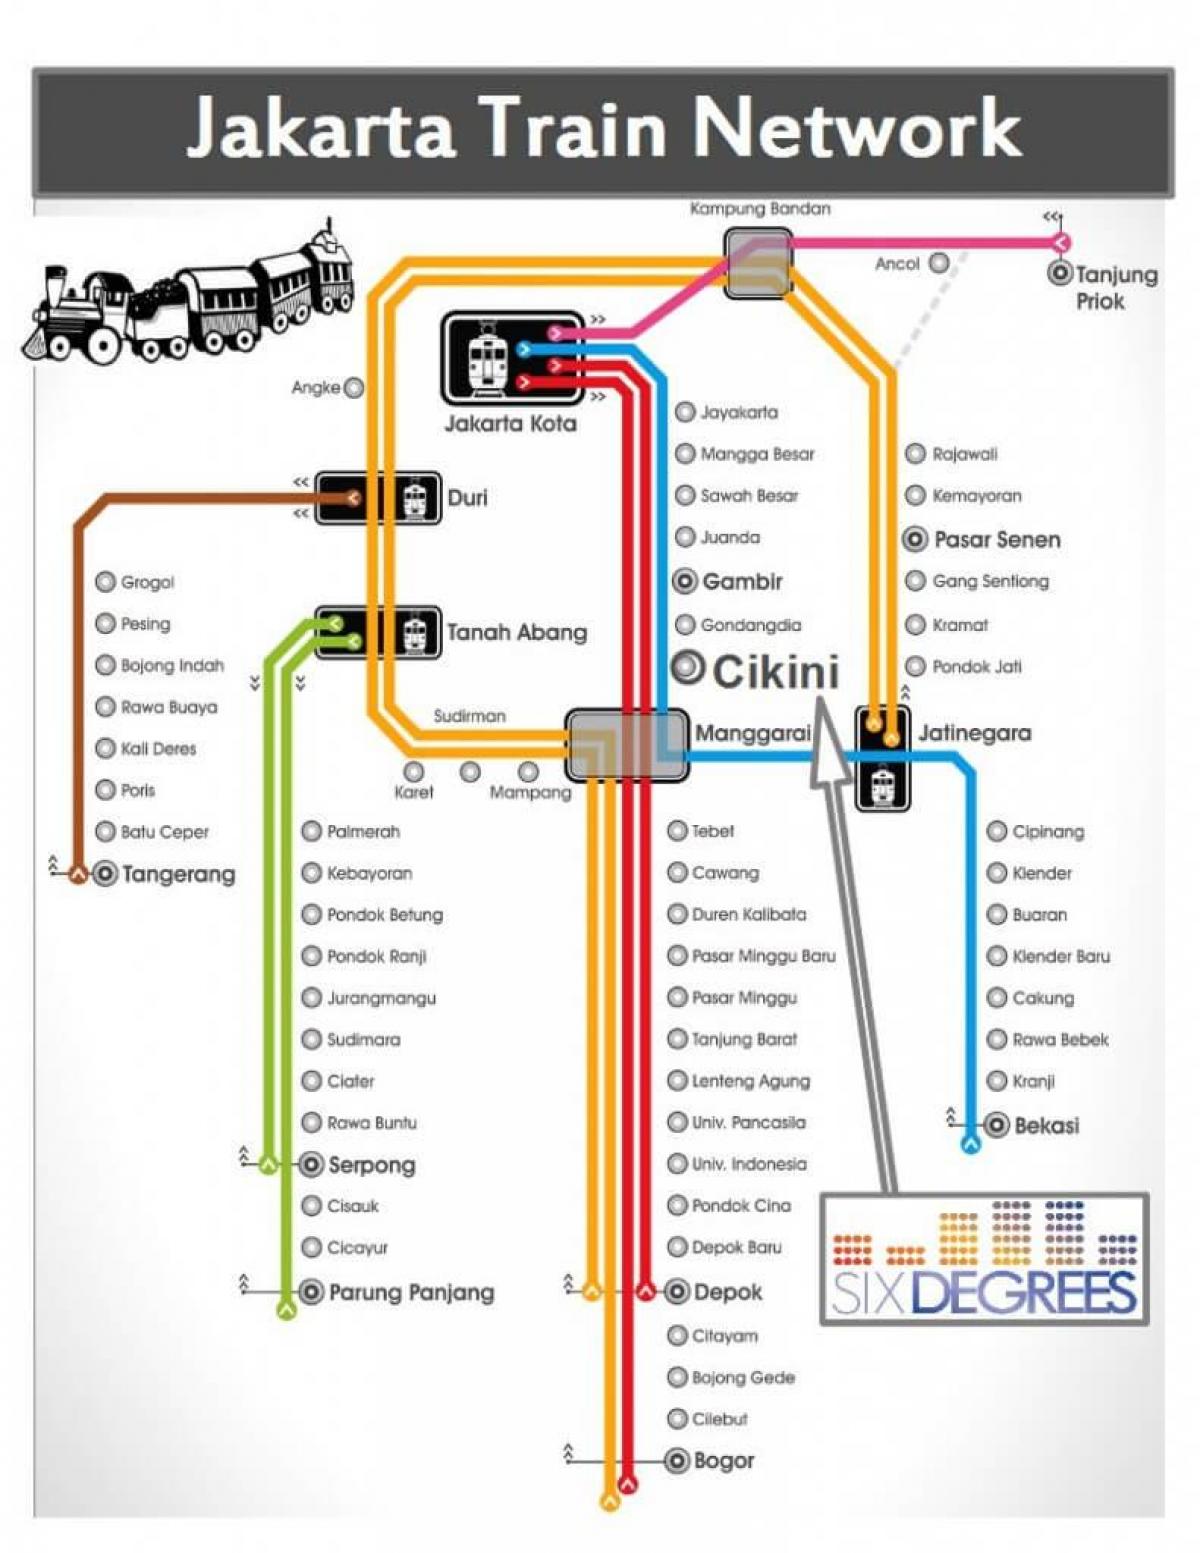 kort over Jakarta station